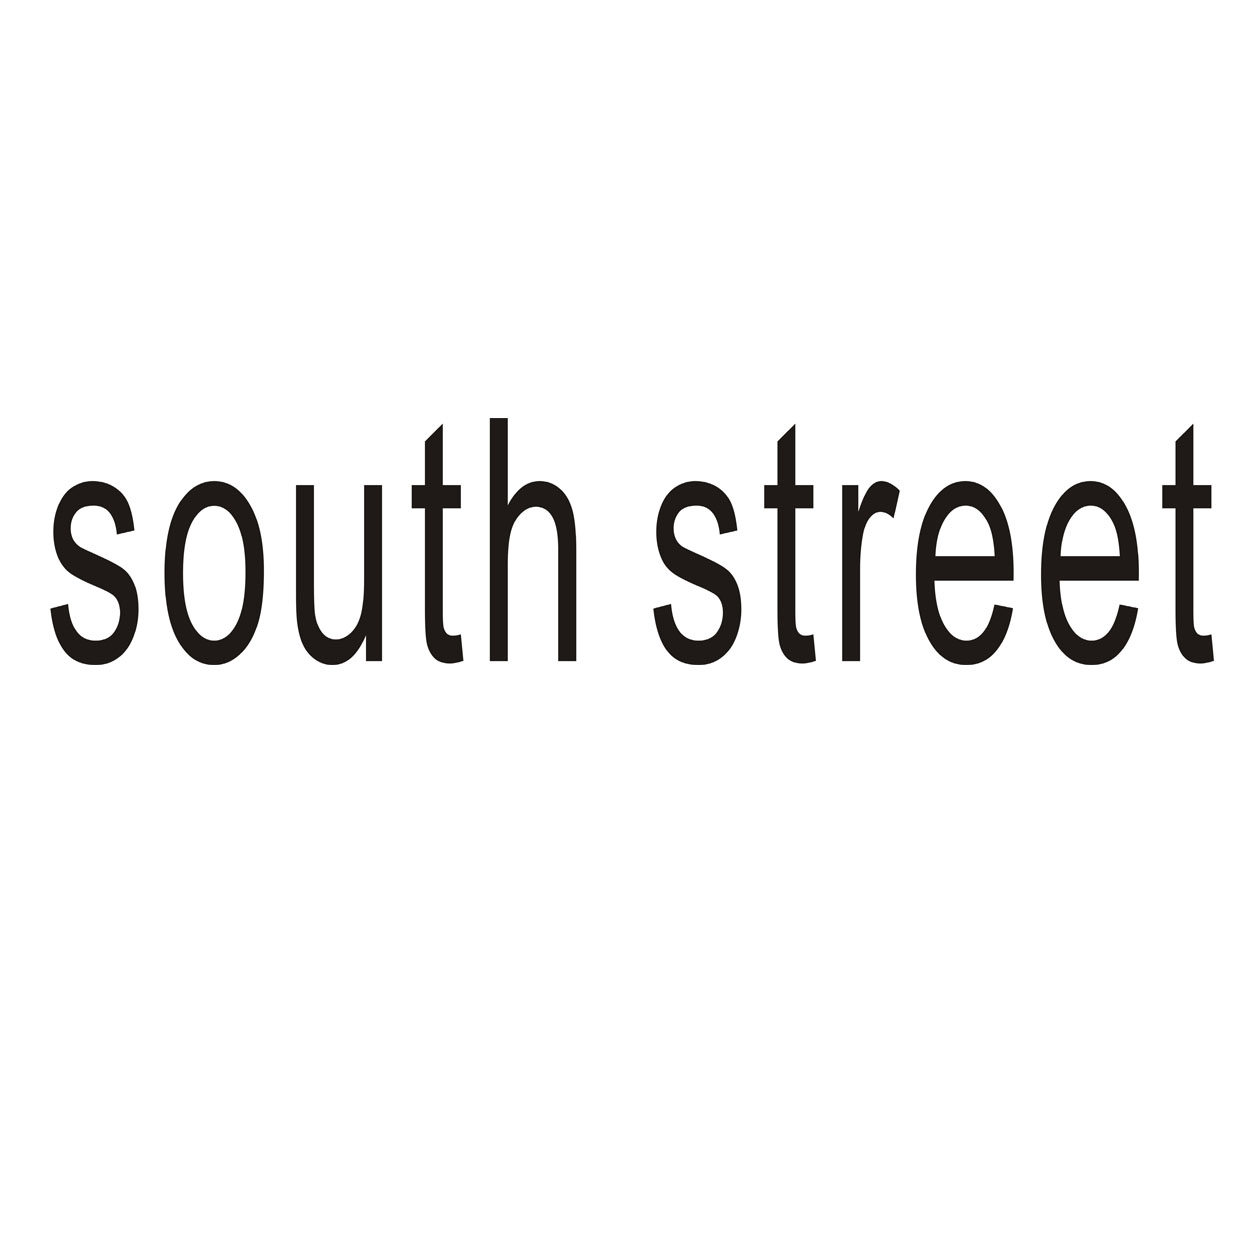 SOUTHSTREET